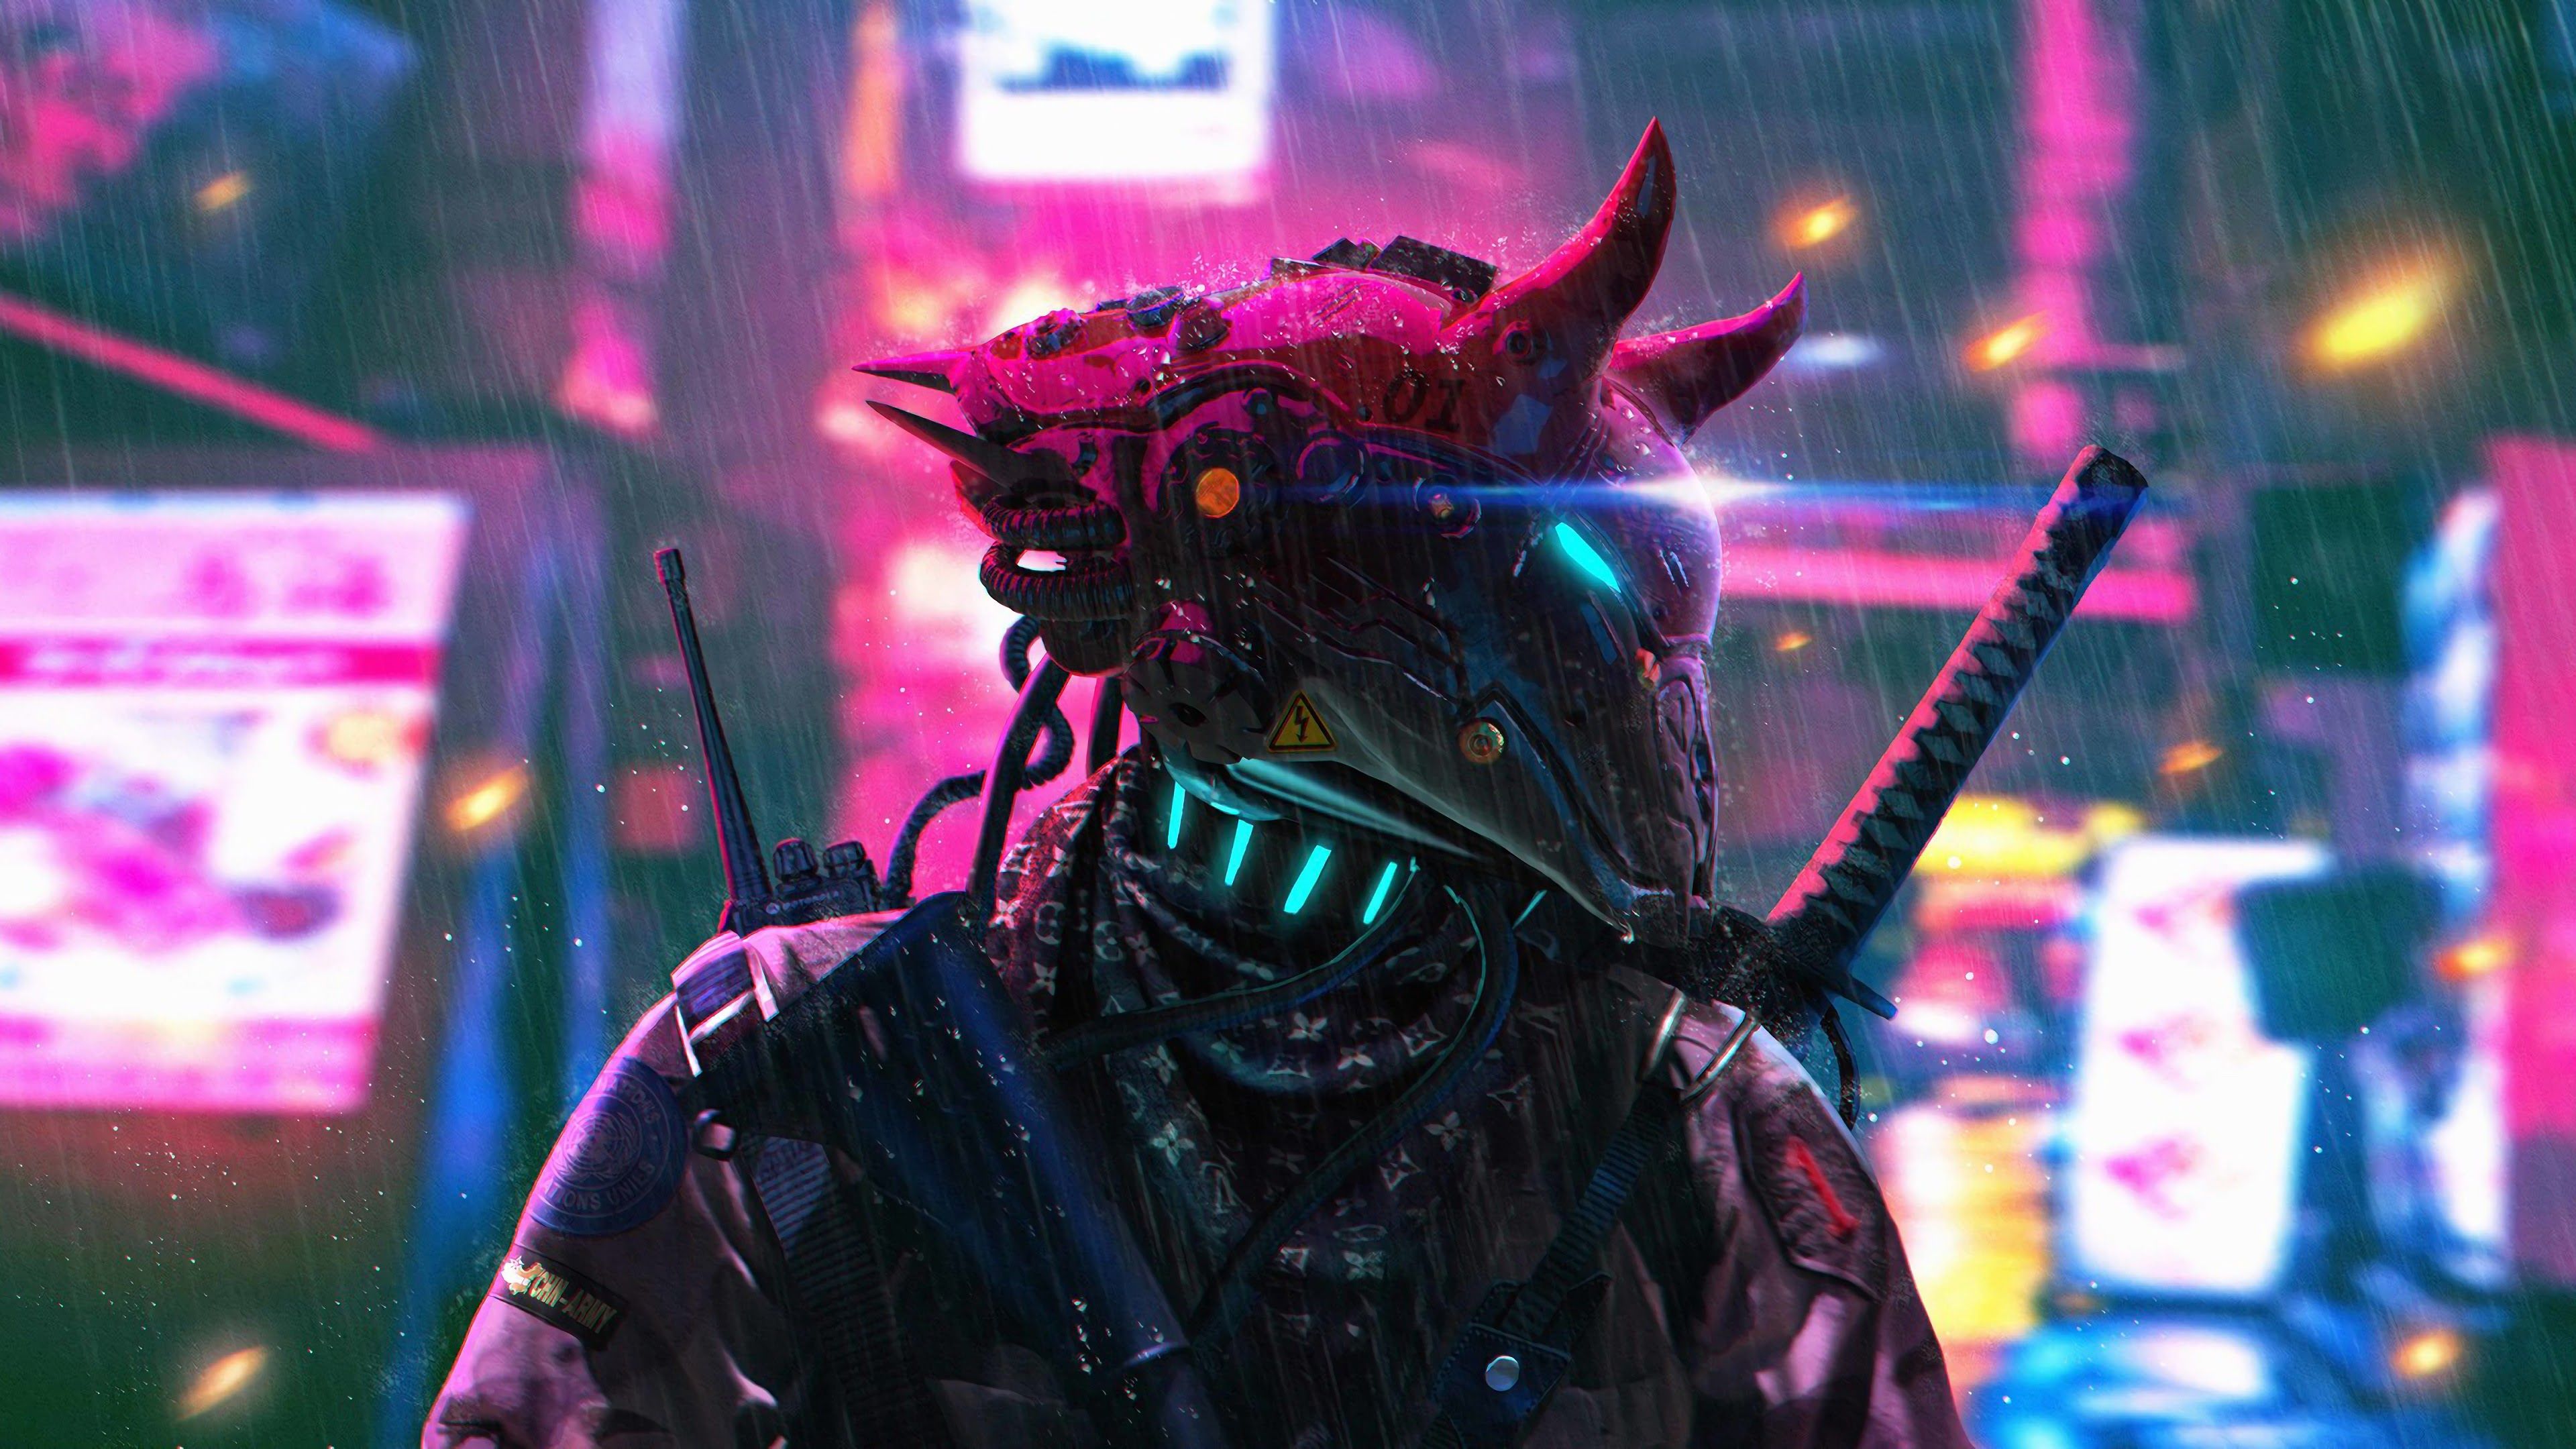 Hd cyberpunk: June 2018